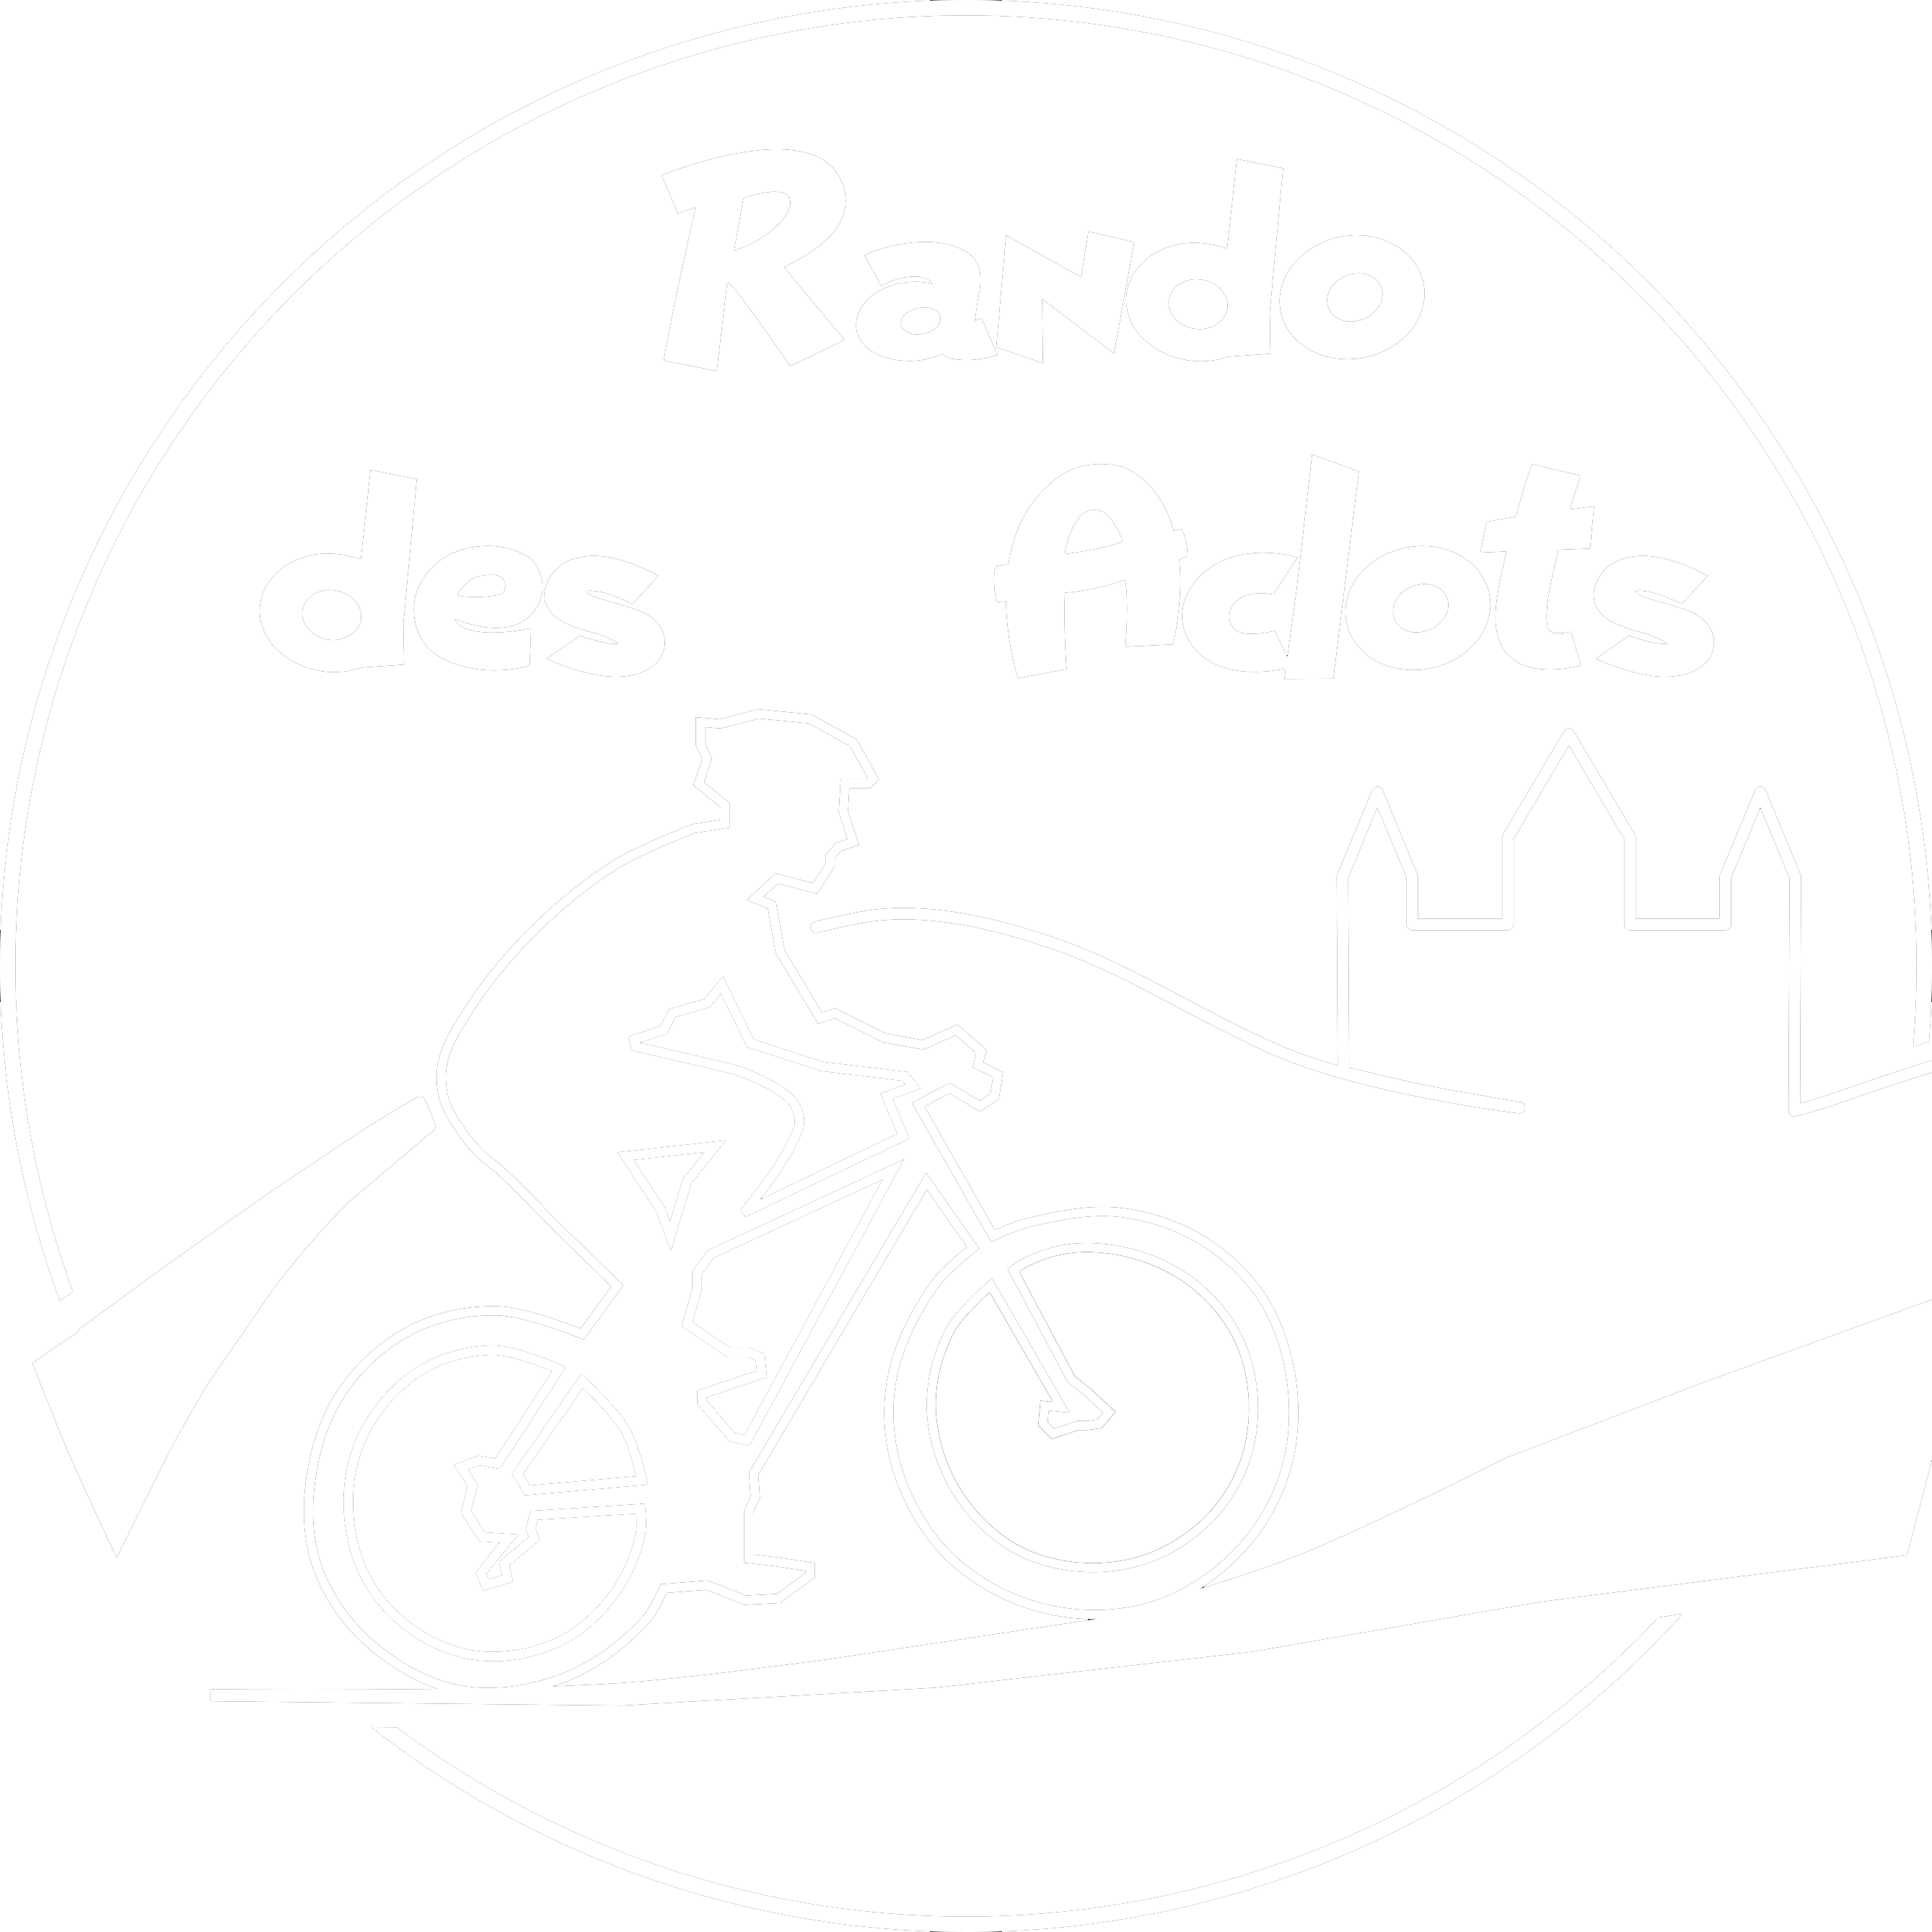 La Rando des Aclots - VTT/Gravel - 17, 30, 40 et 61km